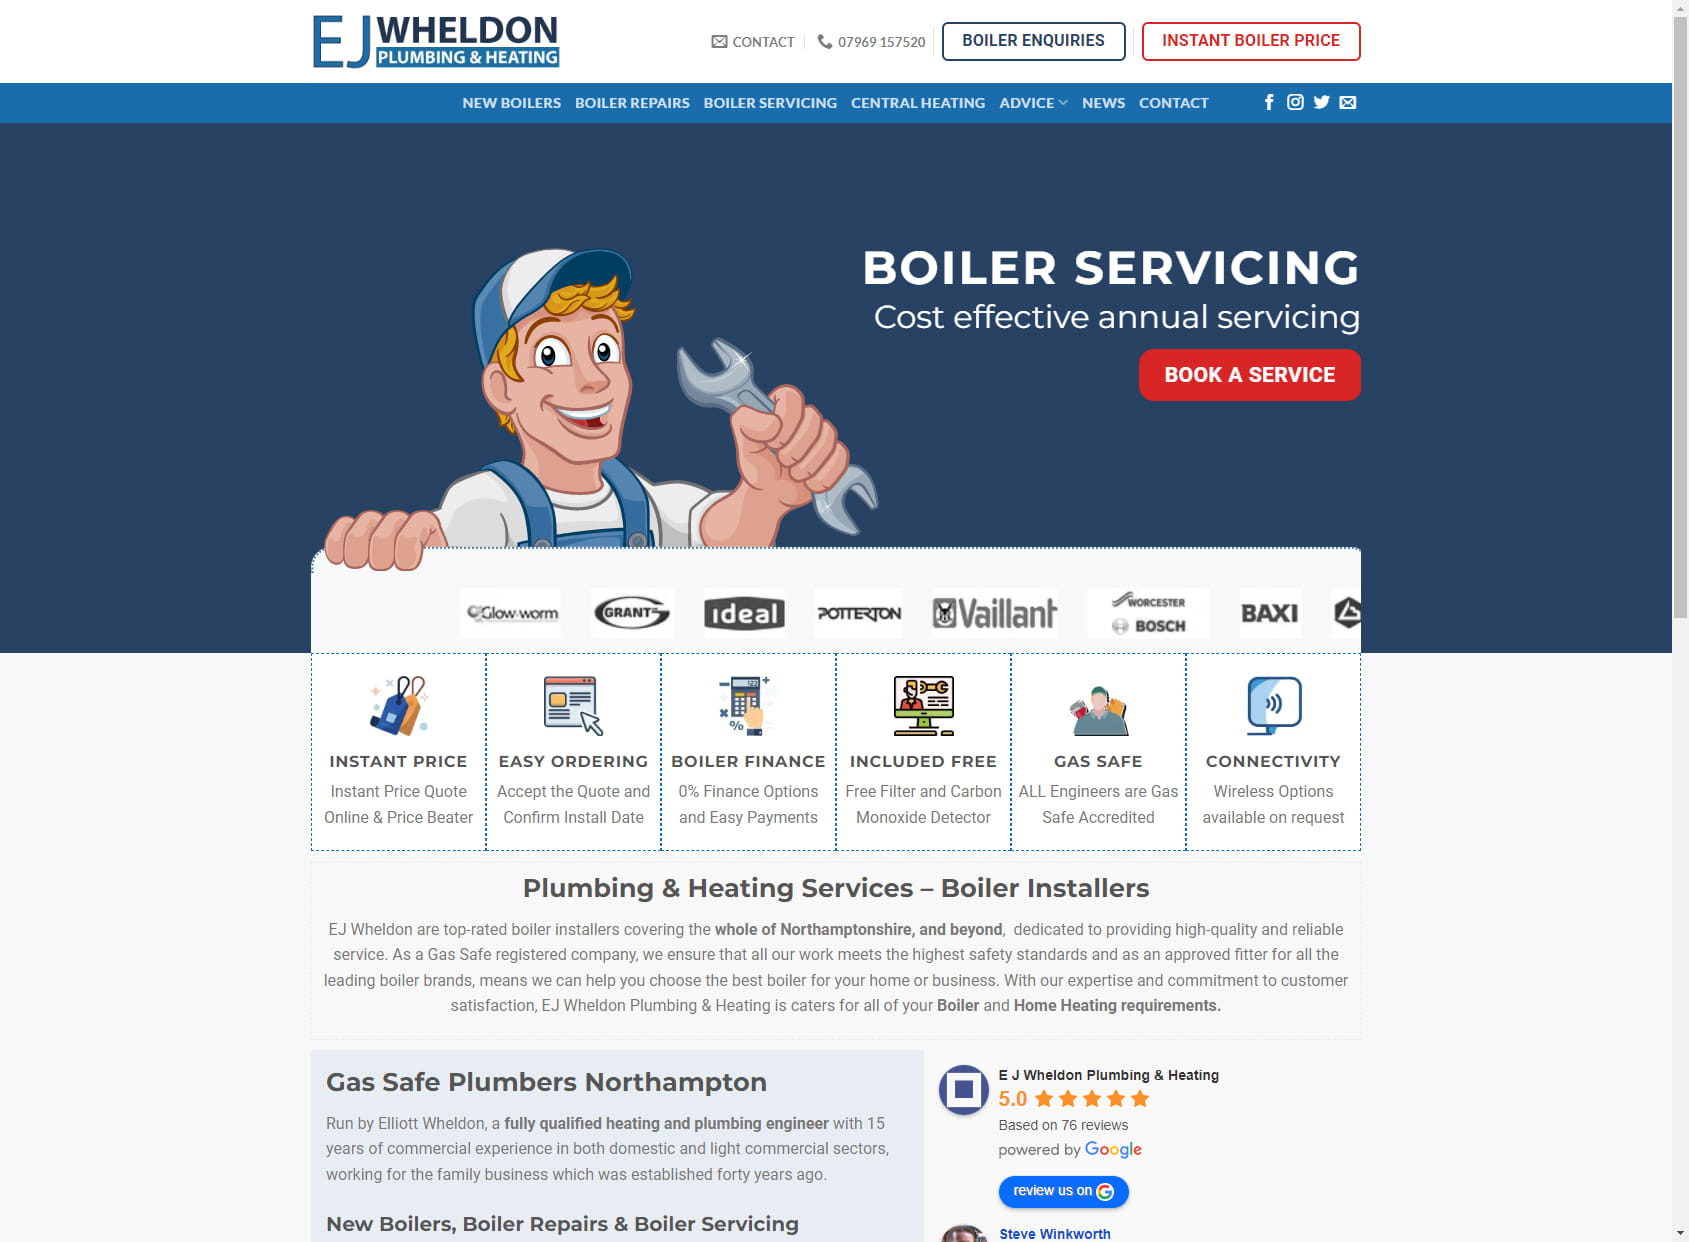 E J Wheldon Plumbing & Heating